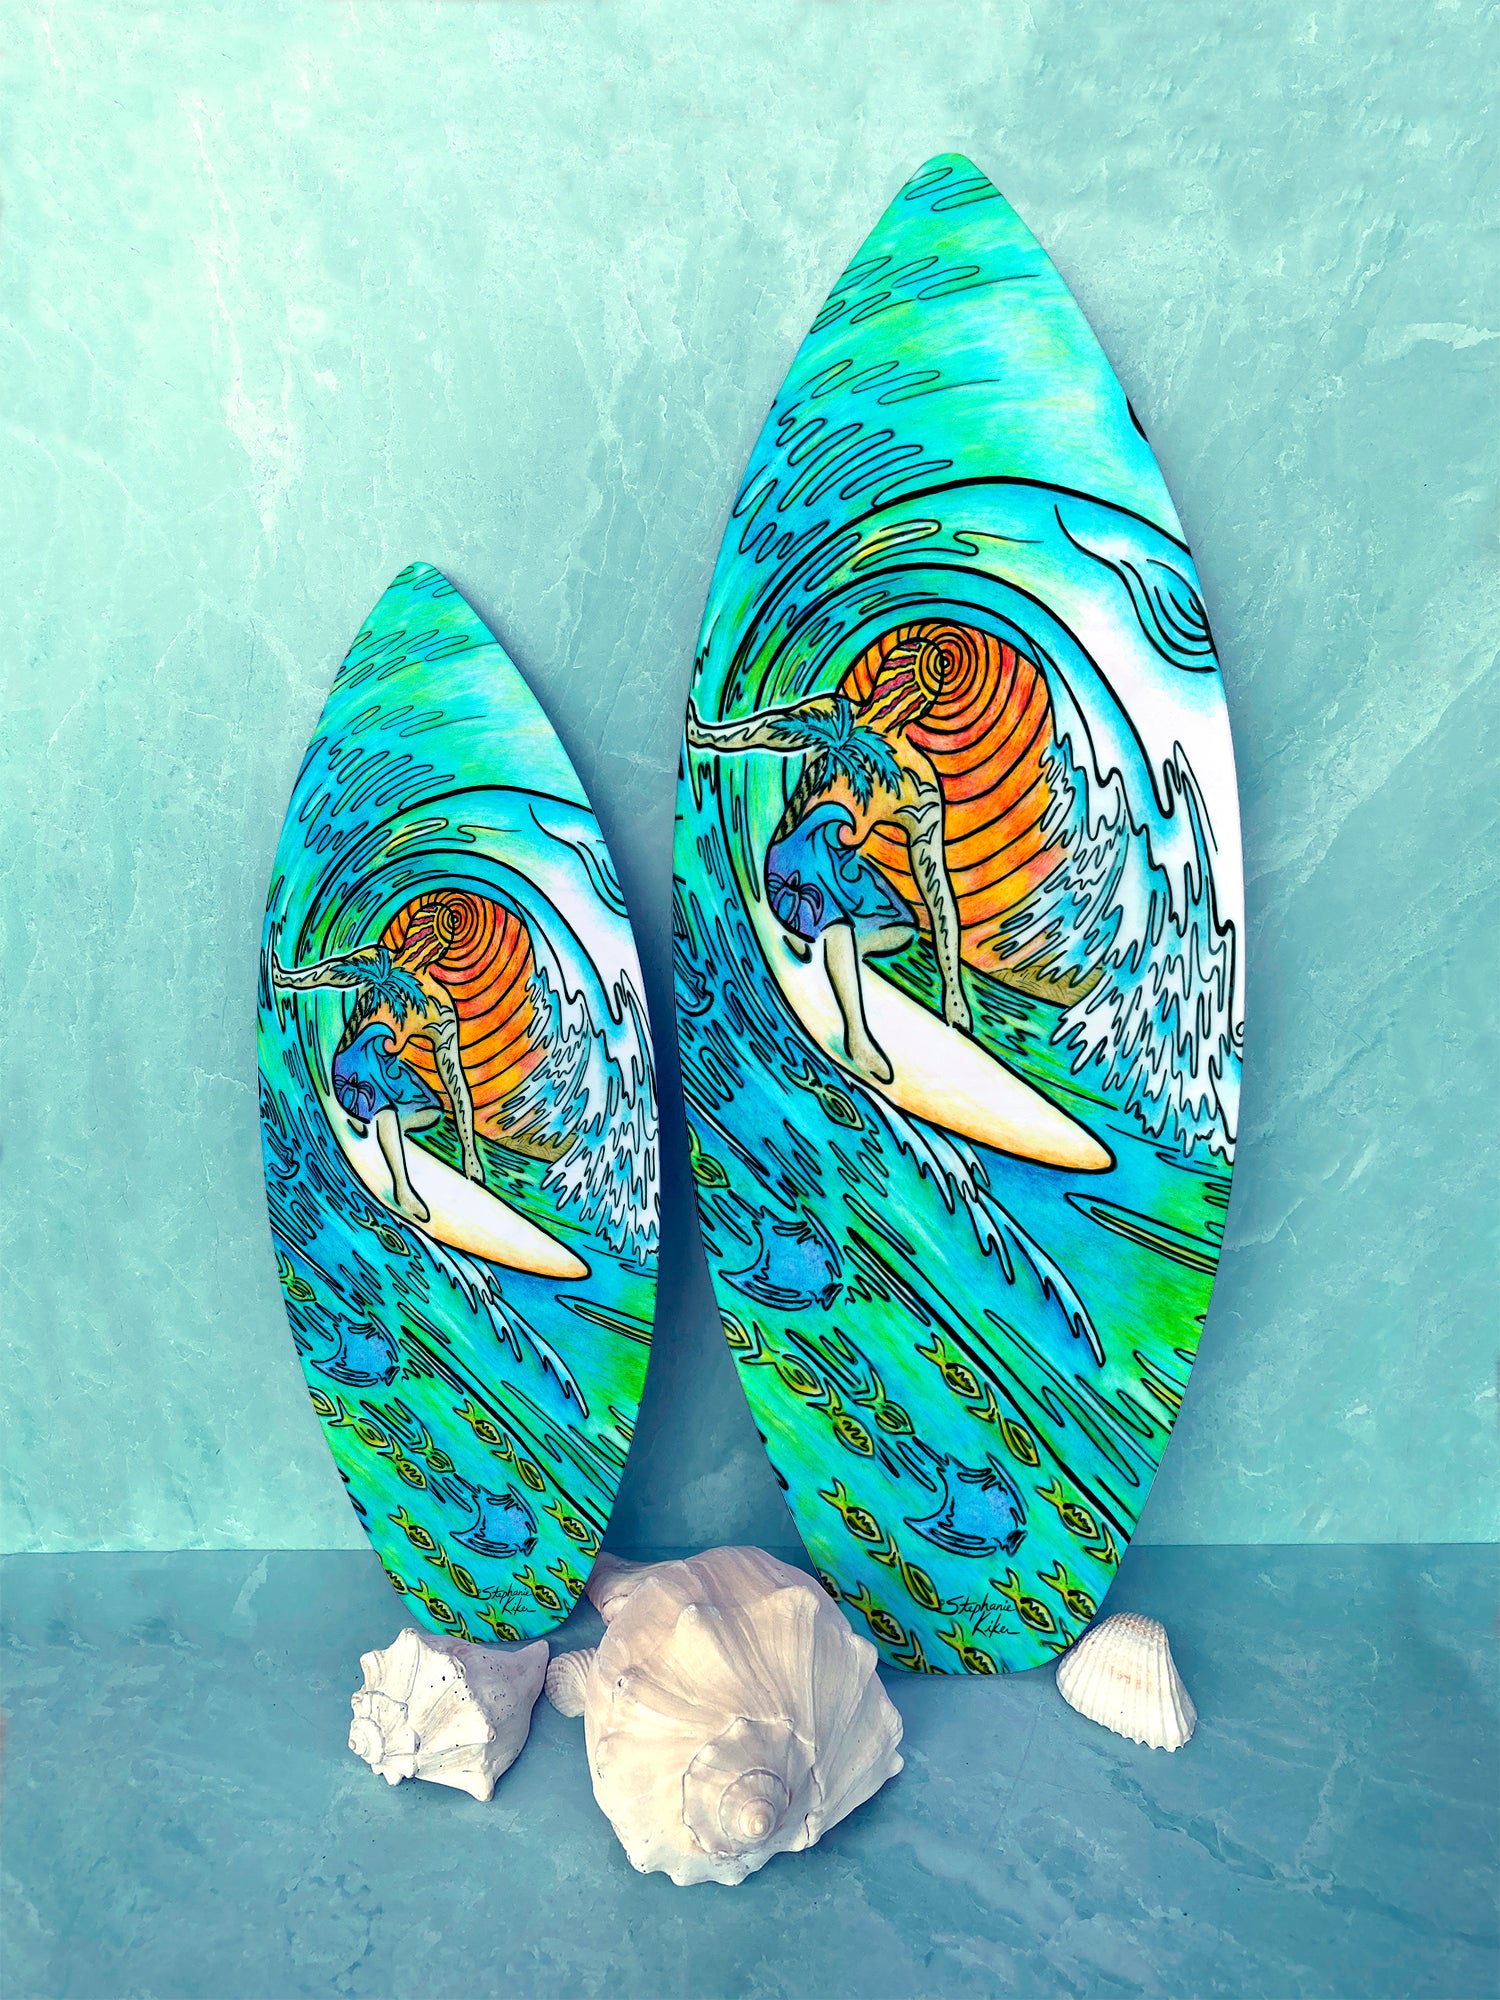 Sunset Surfer Surfboard Wall Art – Stephanie Kiker Designs